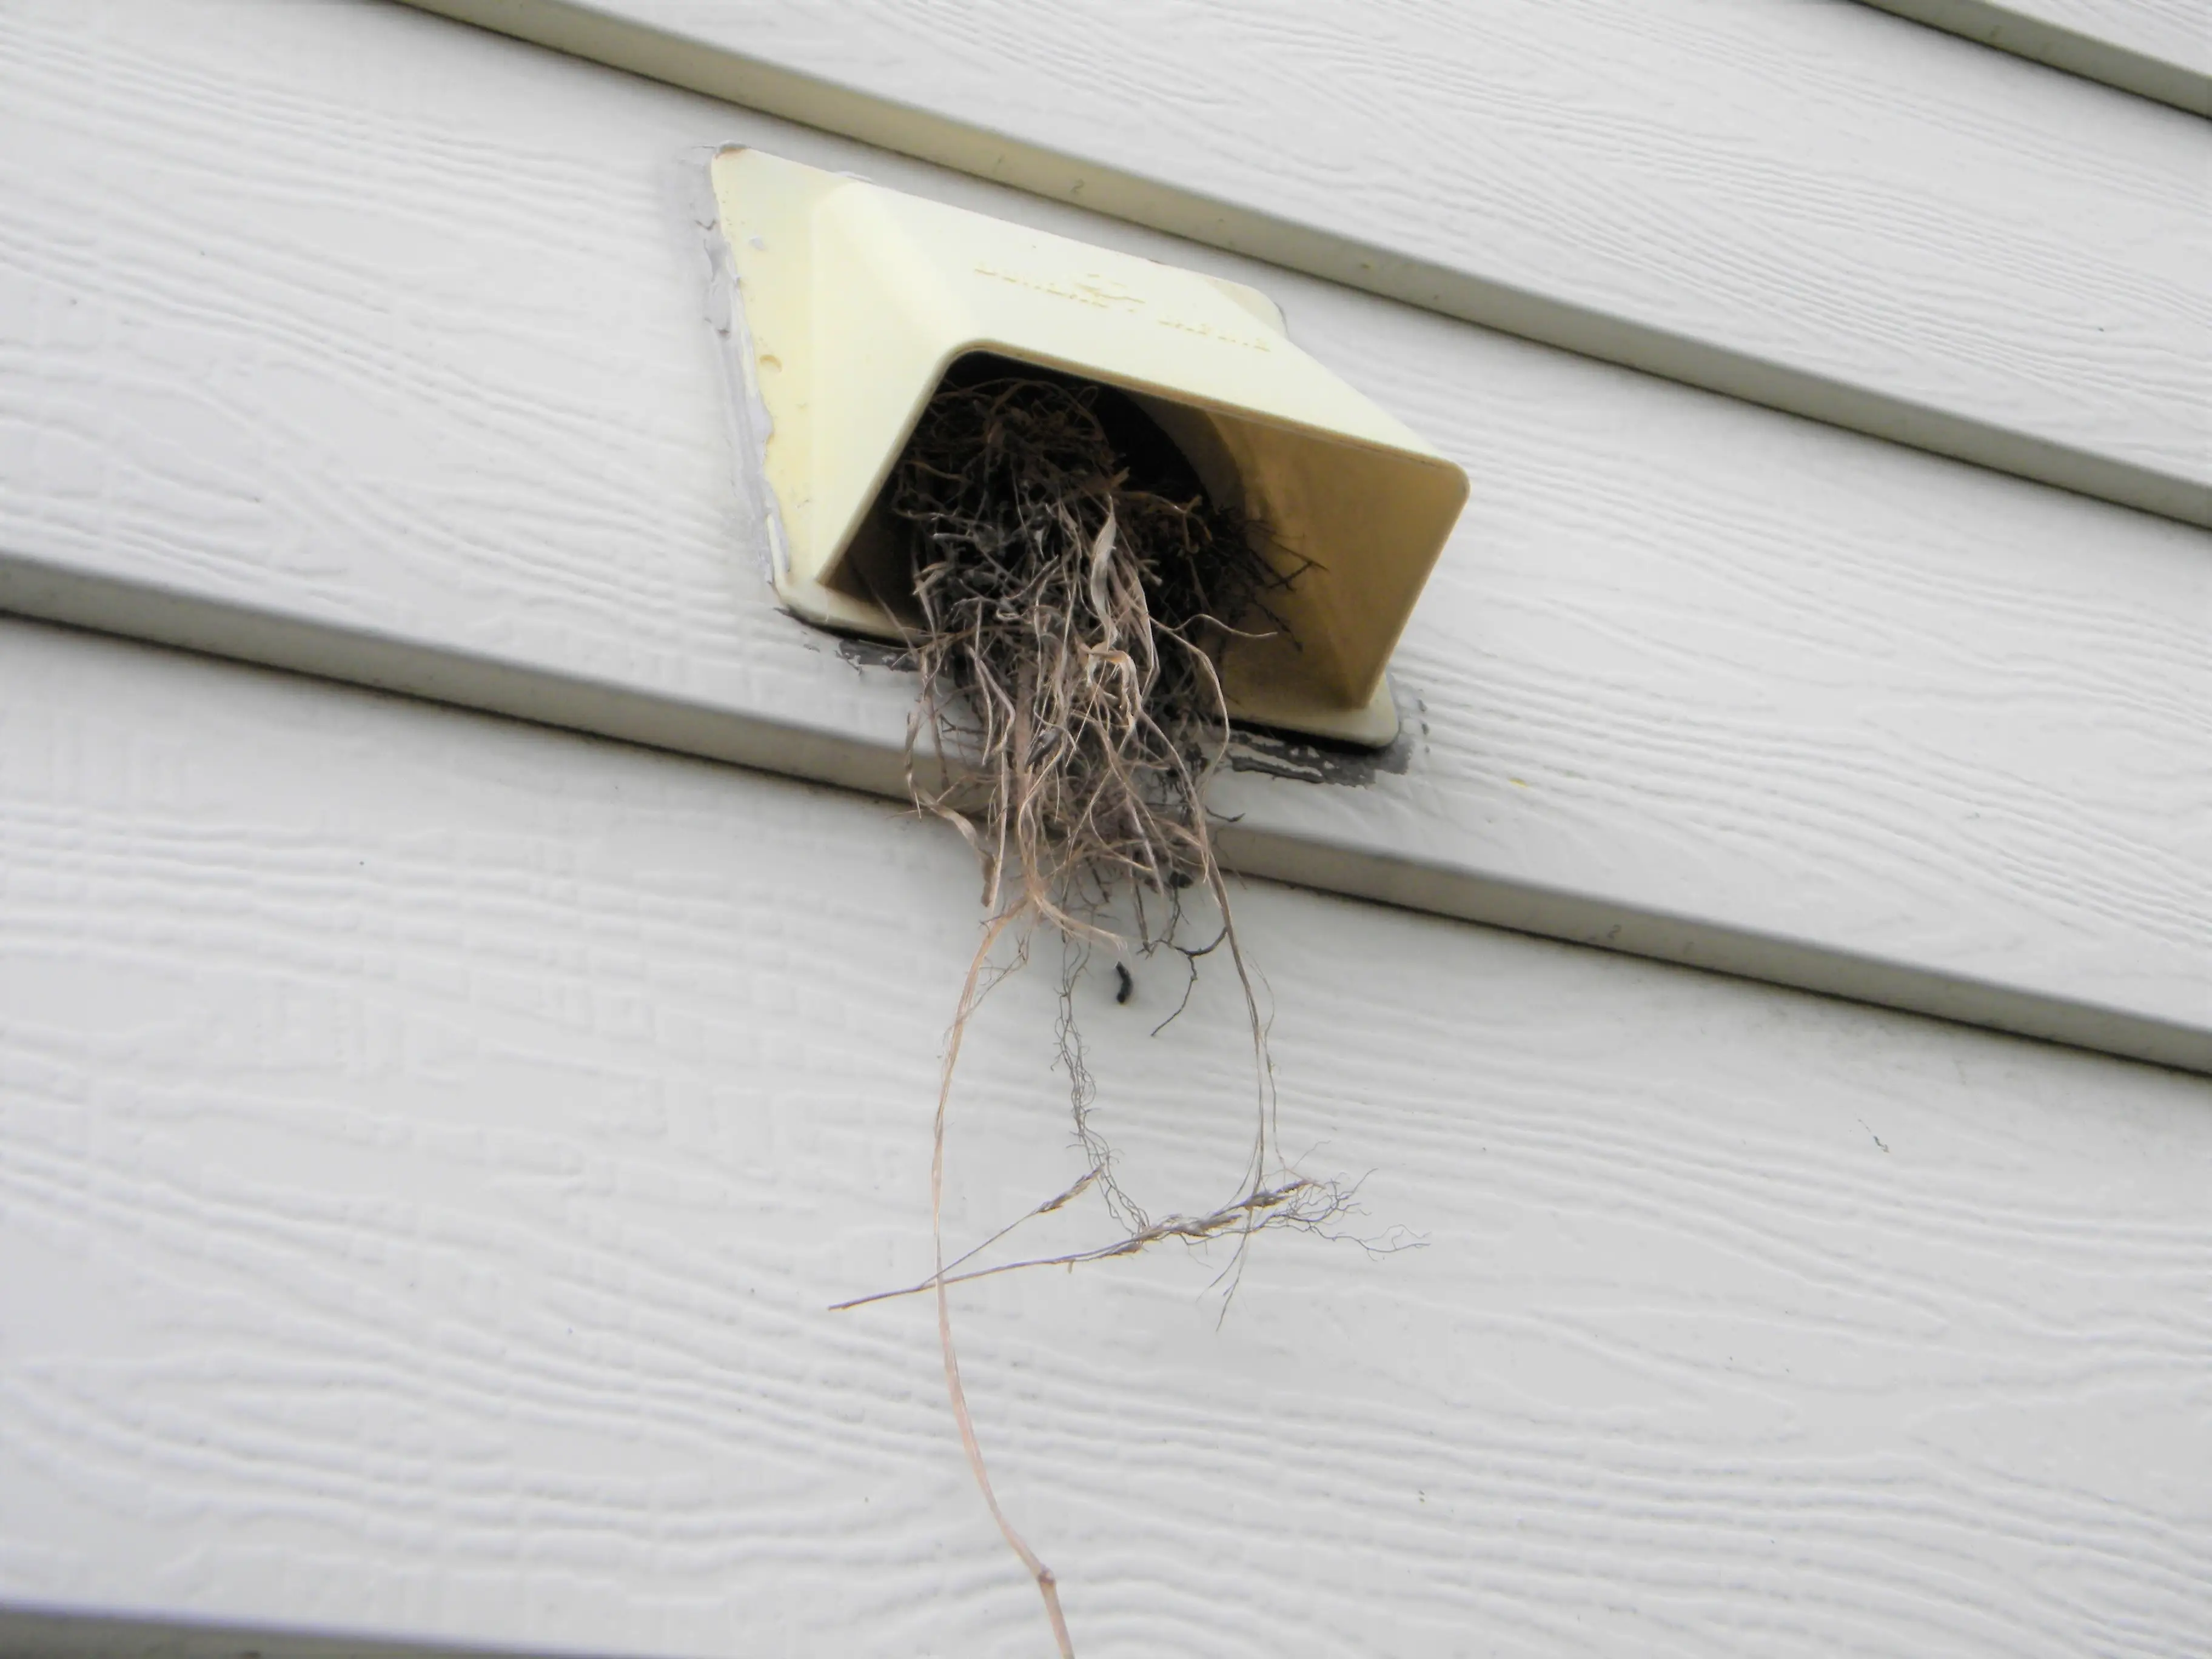 Bird's nest in a dryer vent